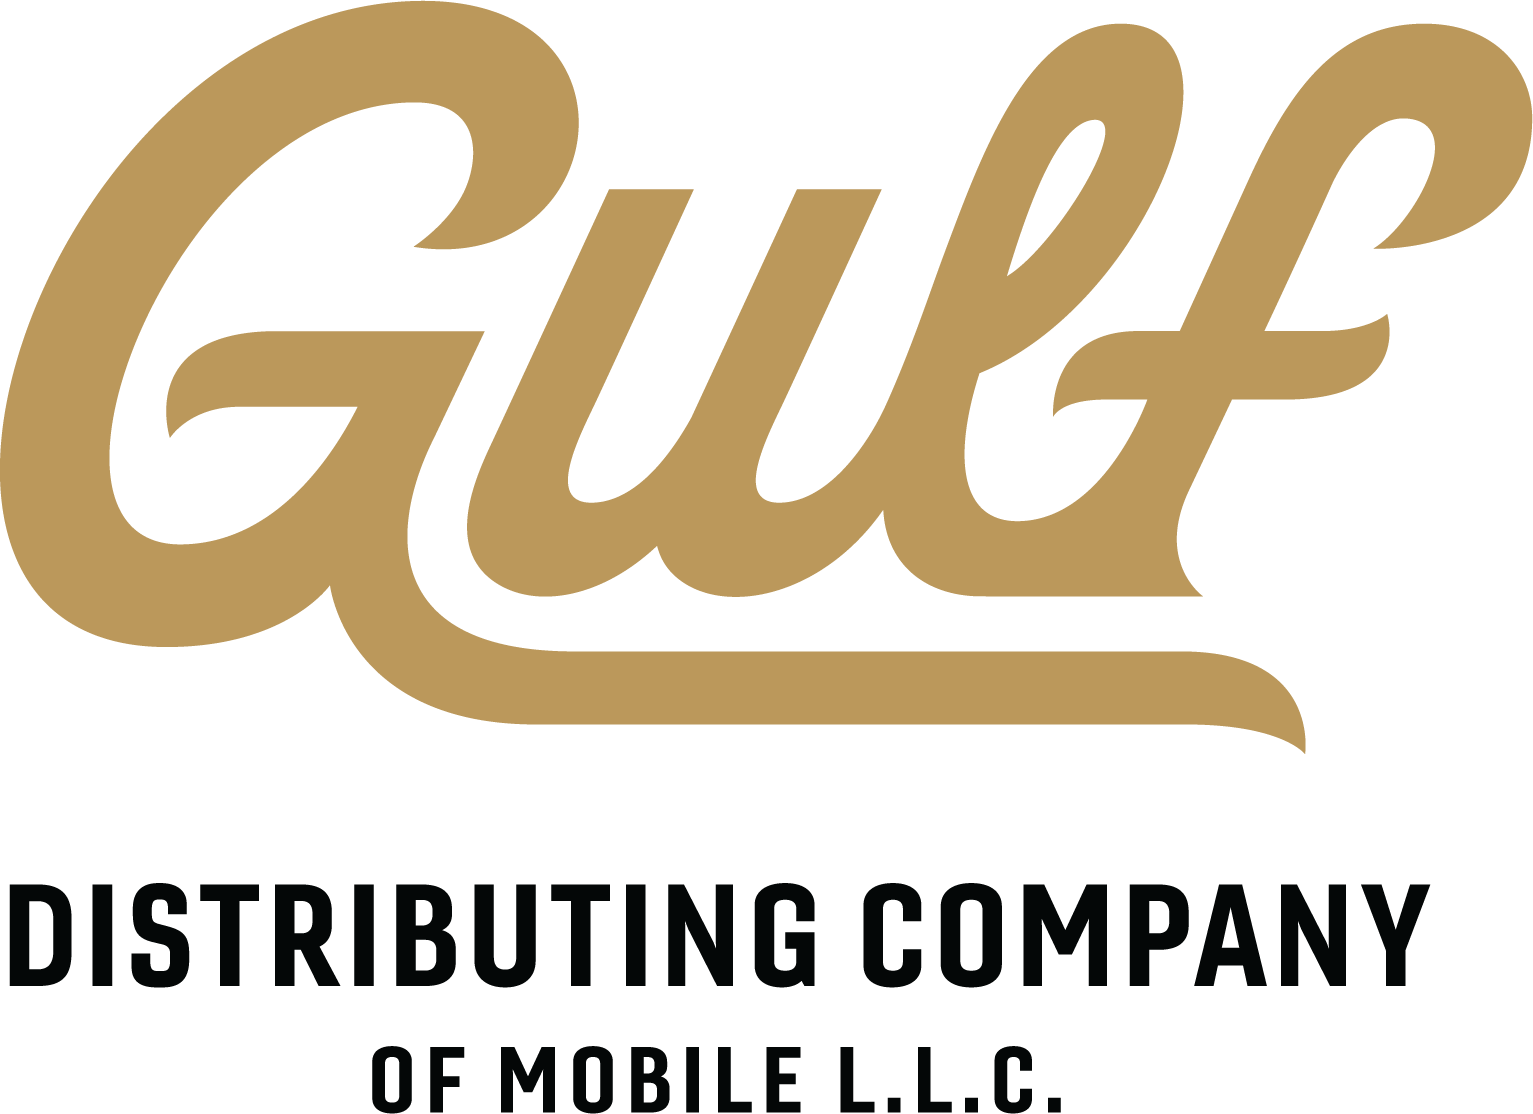 Gulf Distributing Company logo